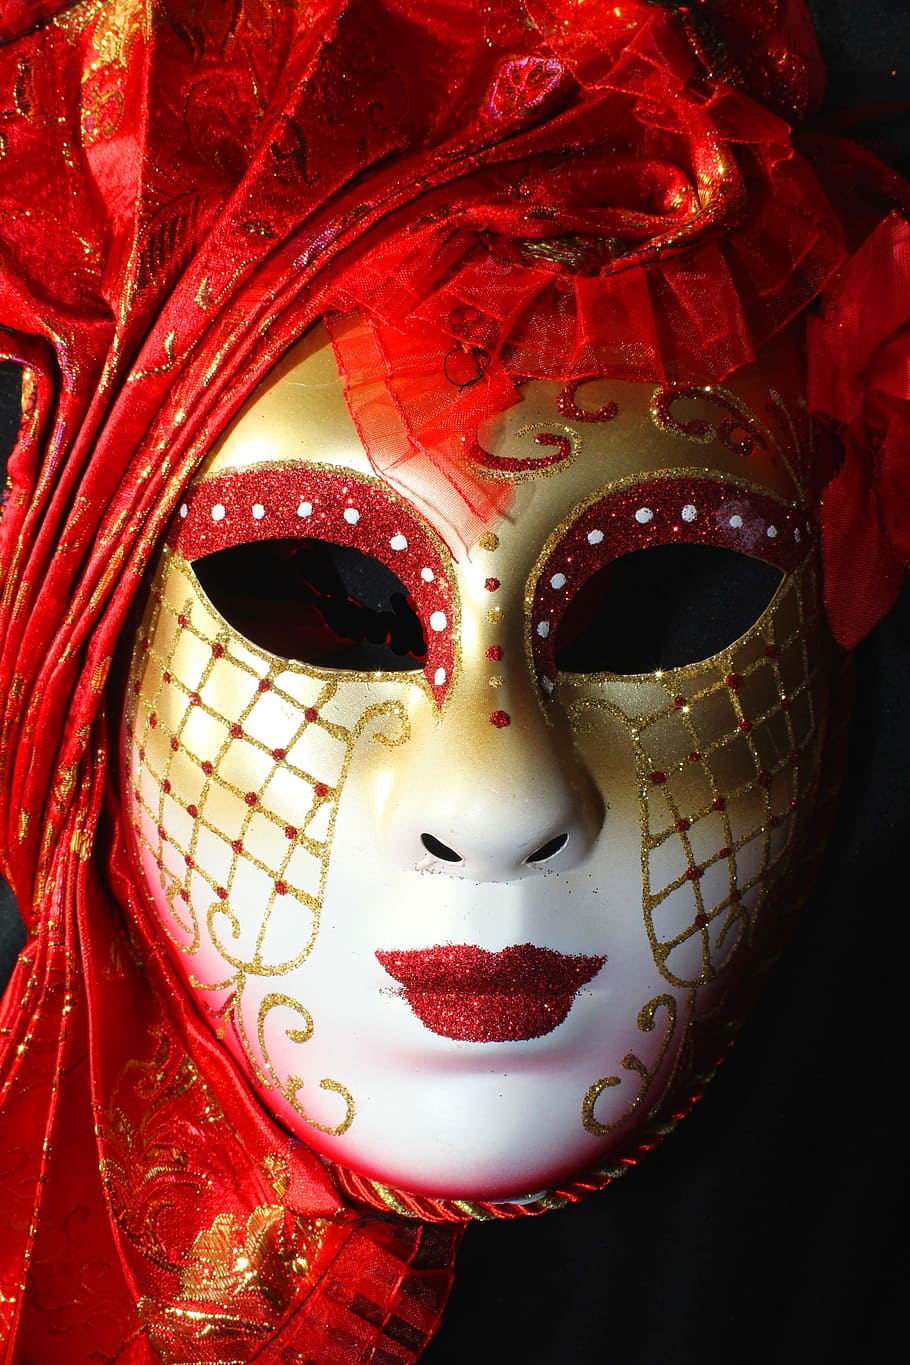 mask, venetian masks, venetian mask, venezia, carnival, costume, face, disguise, red, mask - disguise